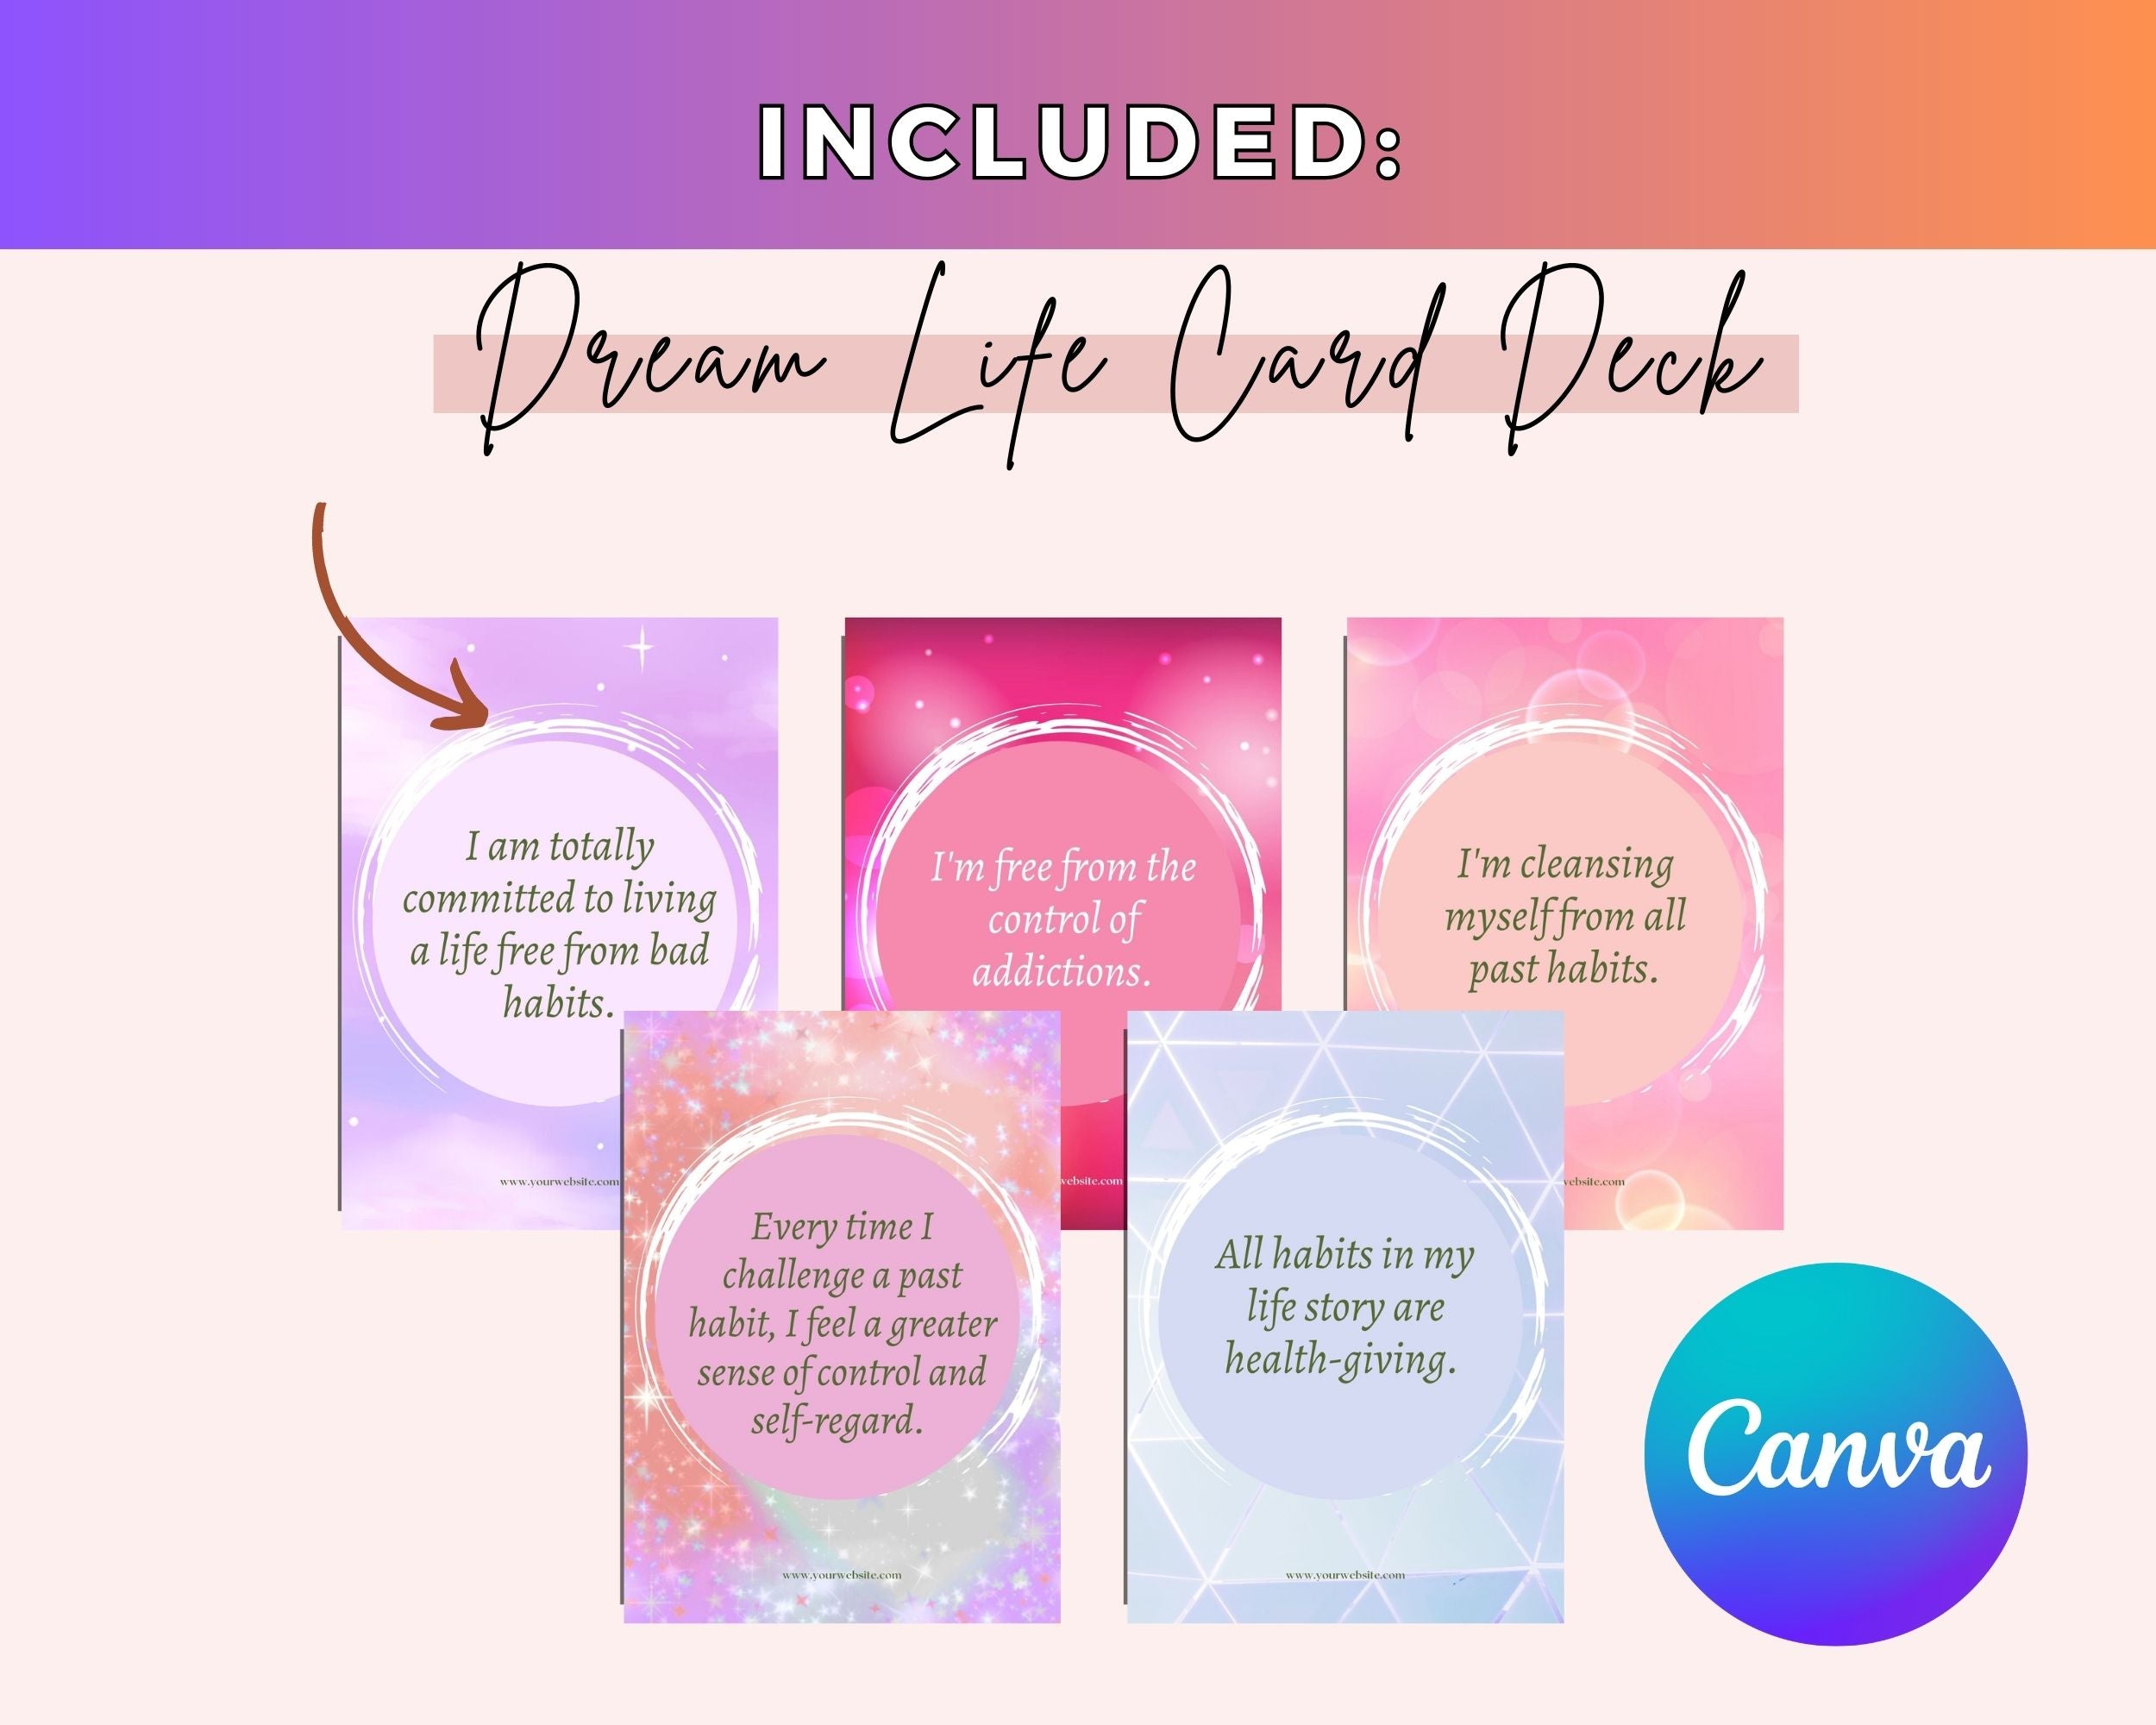 Dream Life Mini Bundle Kit | For Commercial Use